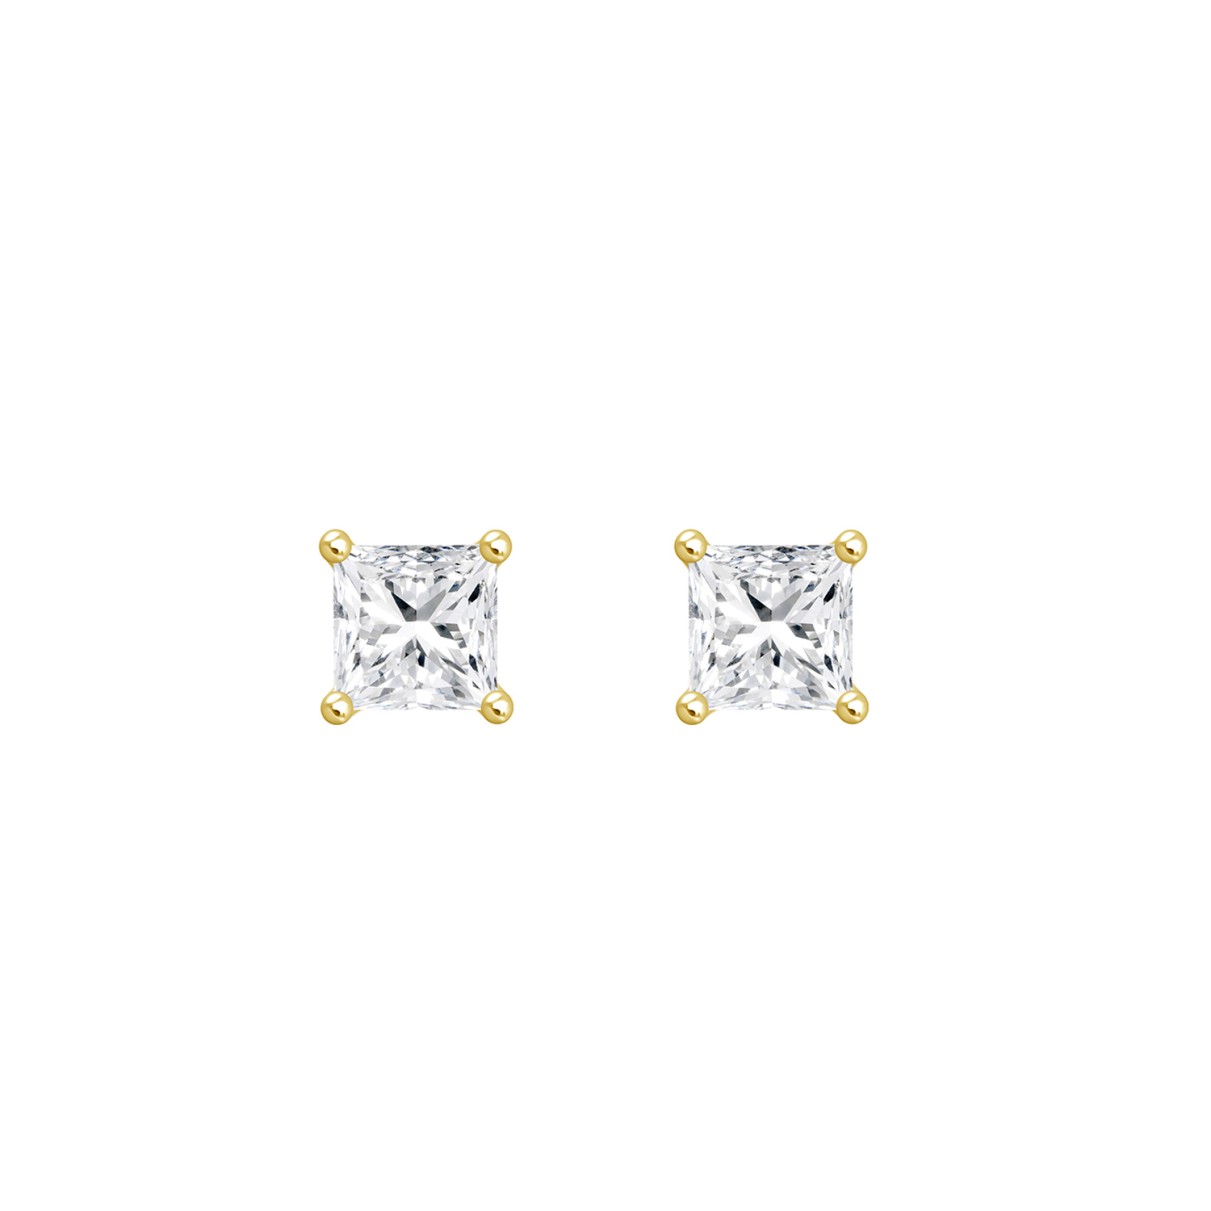 LADIES SOLITAIRE EARRINGS 2 1/2CT PRINCESS DIAMOND 14K YELLOW GOLD 